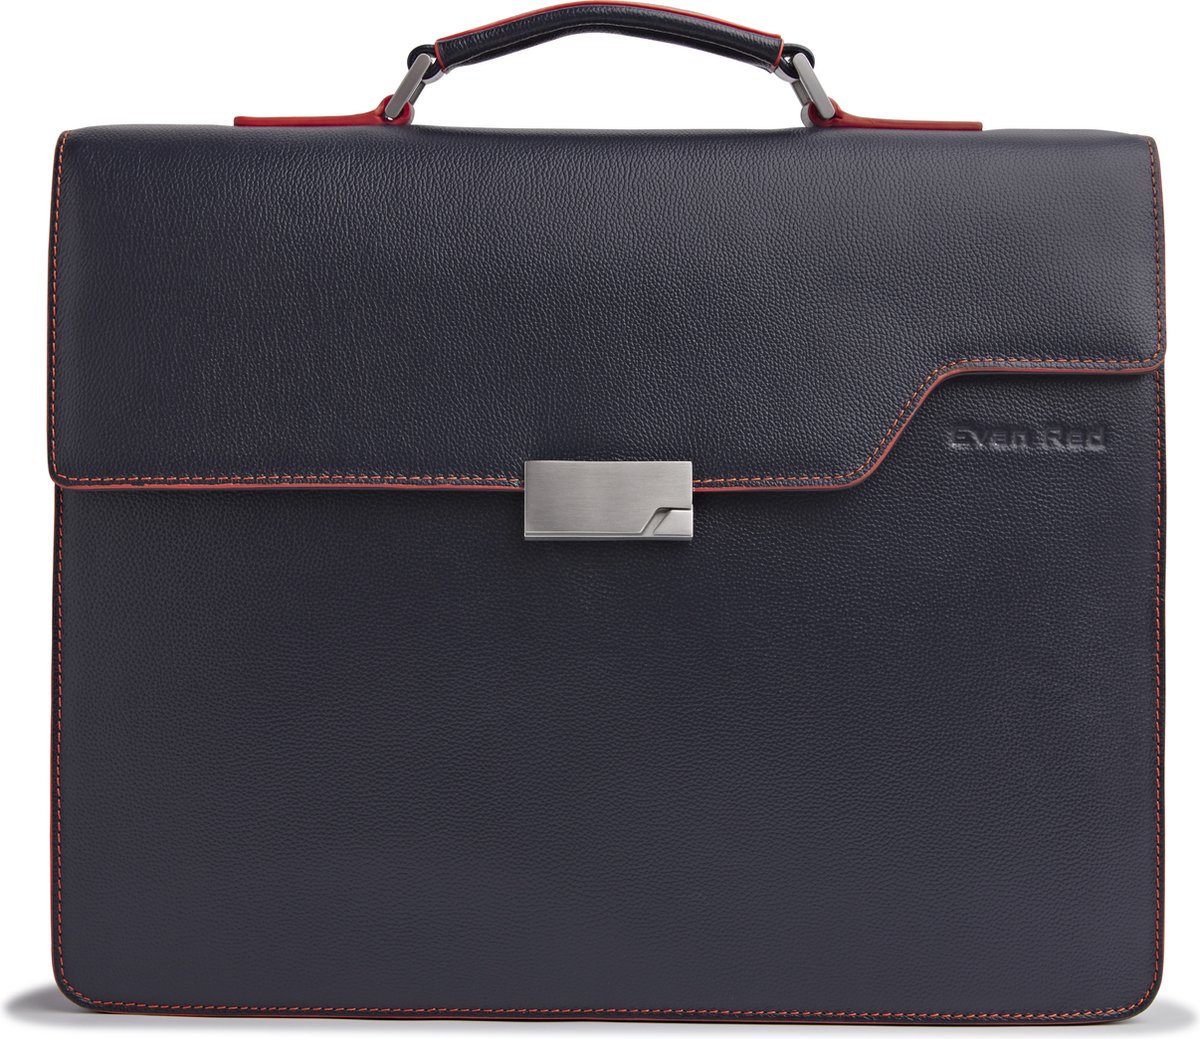 Evan Red Amsterdam Briefcase - Laptoptas - Navy Blauw - Leer